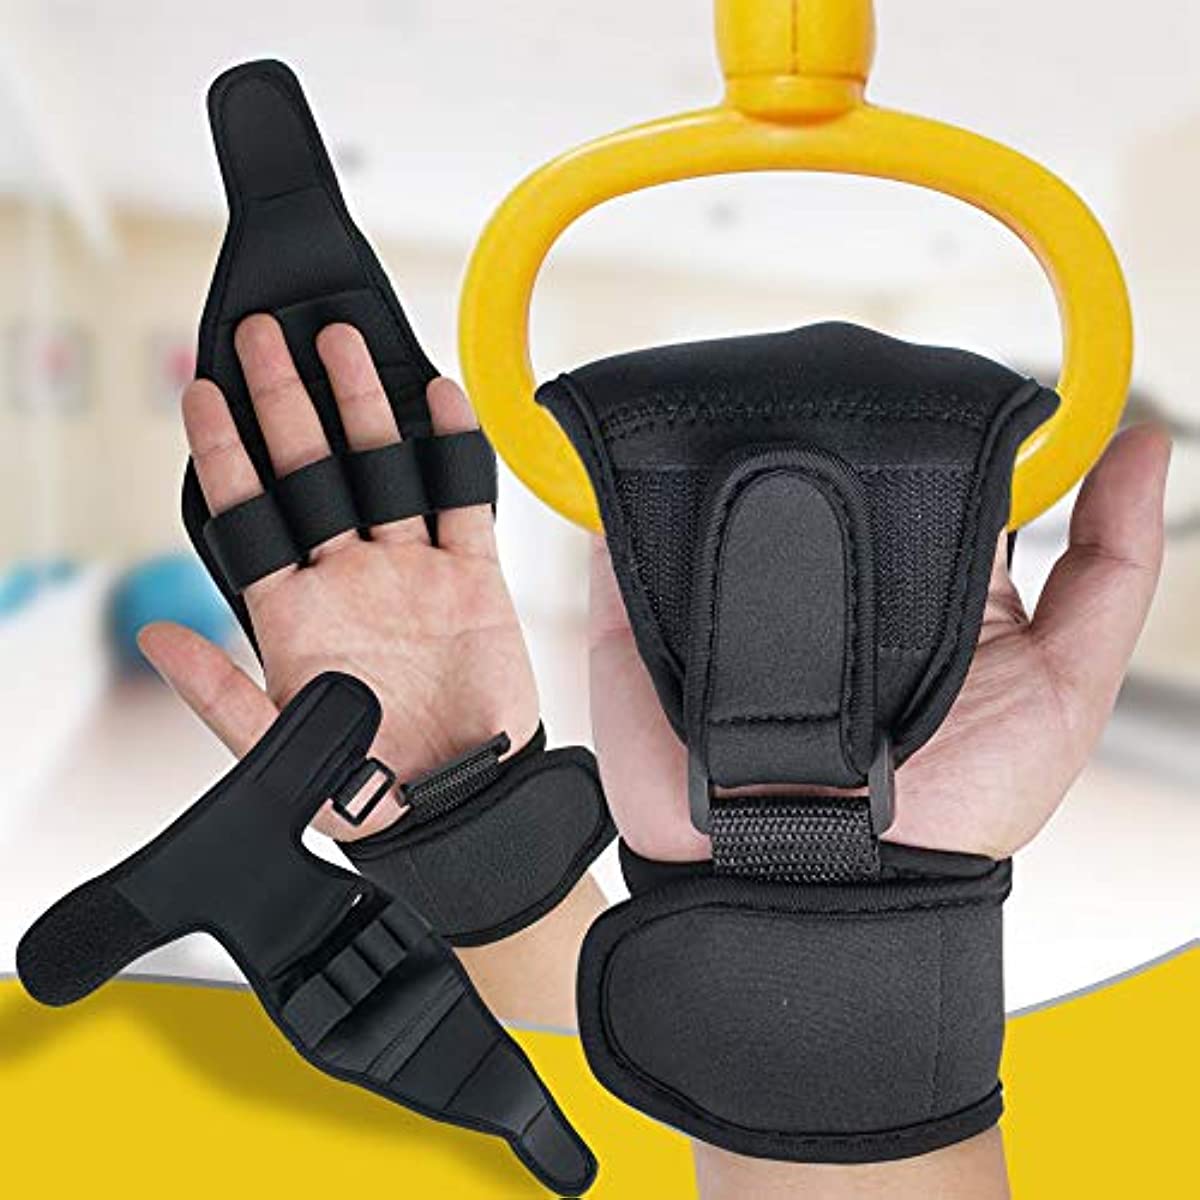 Lolicute Finger Splint Brace Ability,Finger Anti-Spasticity Rehabilitation Auxiliary Training Gloves for Stroke Hemiplegia Patient and Athlete Finger Rehabilitation [Single Hand Universal] (Black)